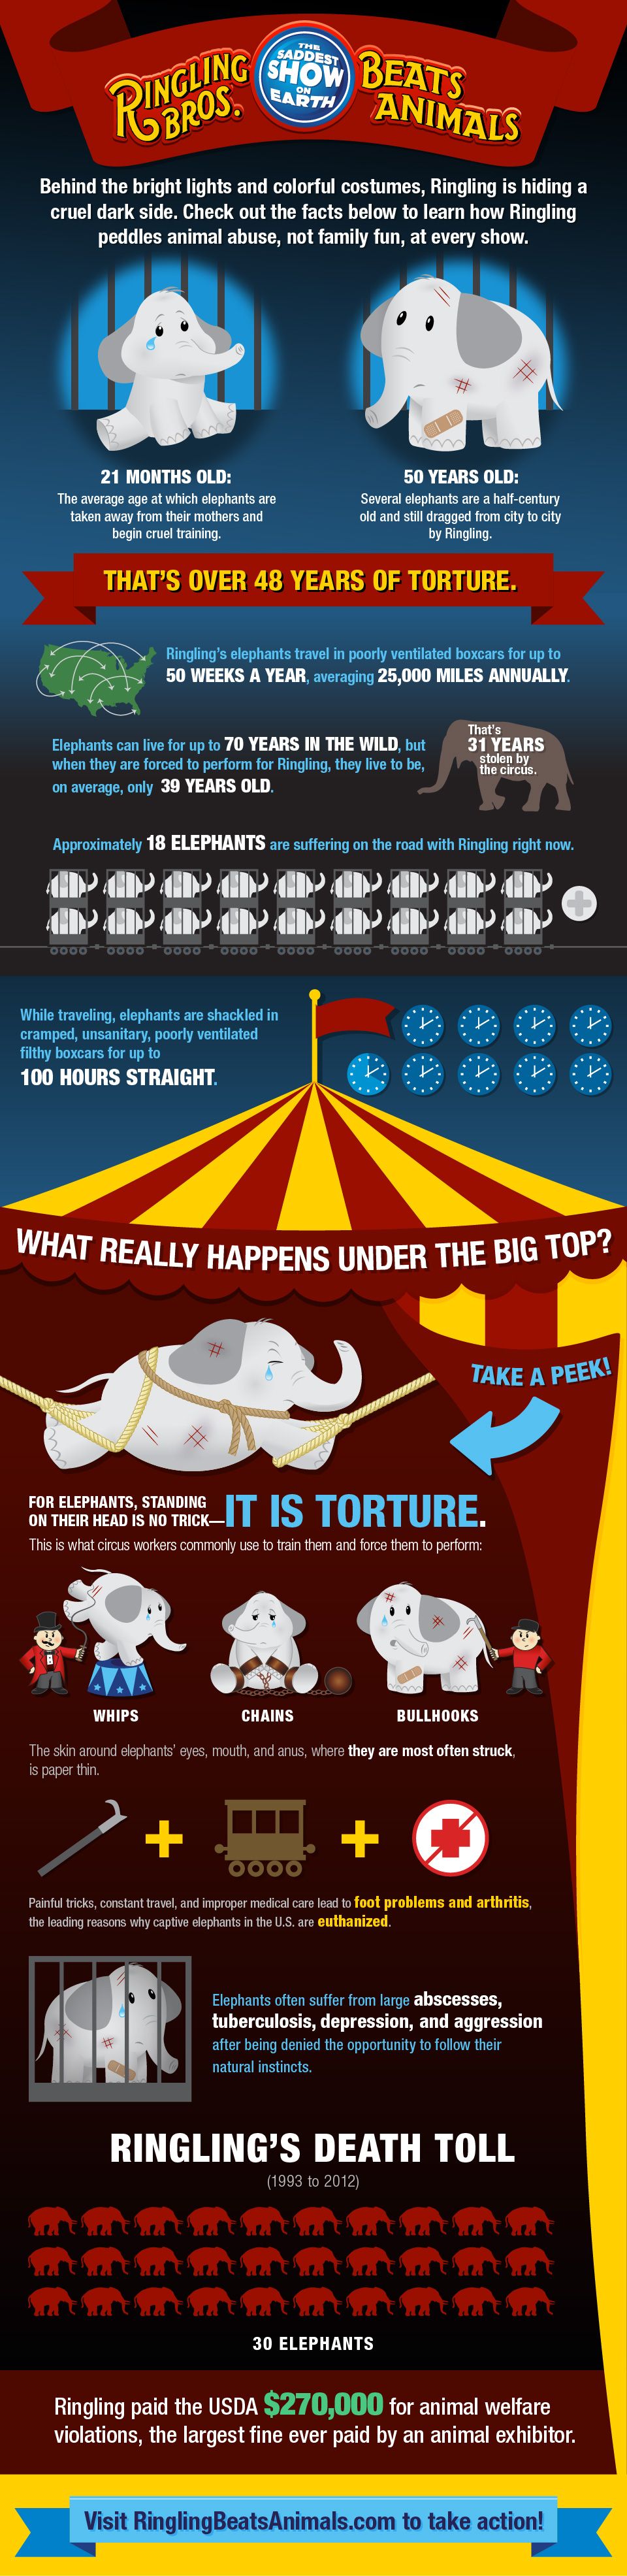 Ringling's Cruelty Exposed (Infographic) | PETA